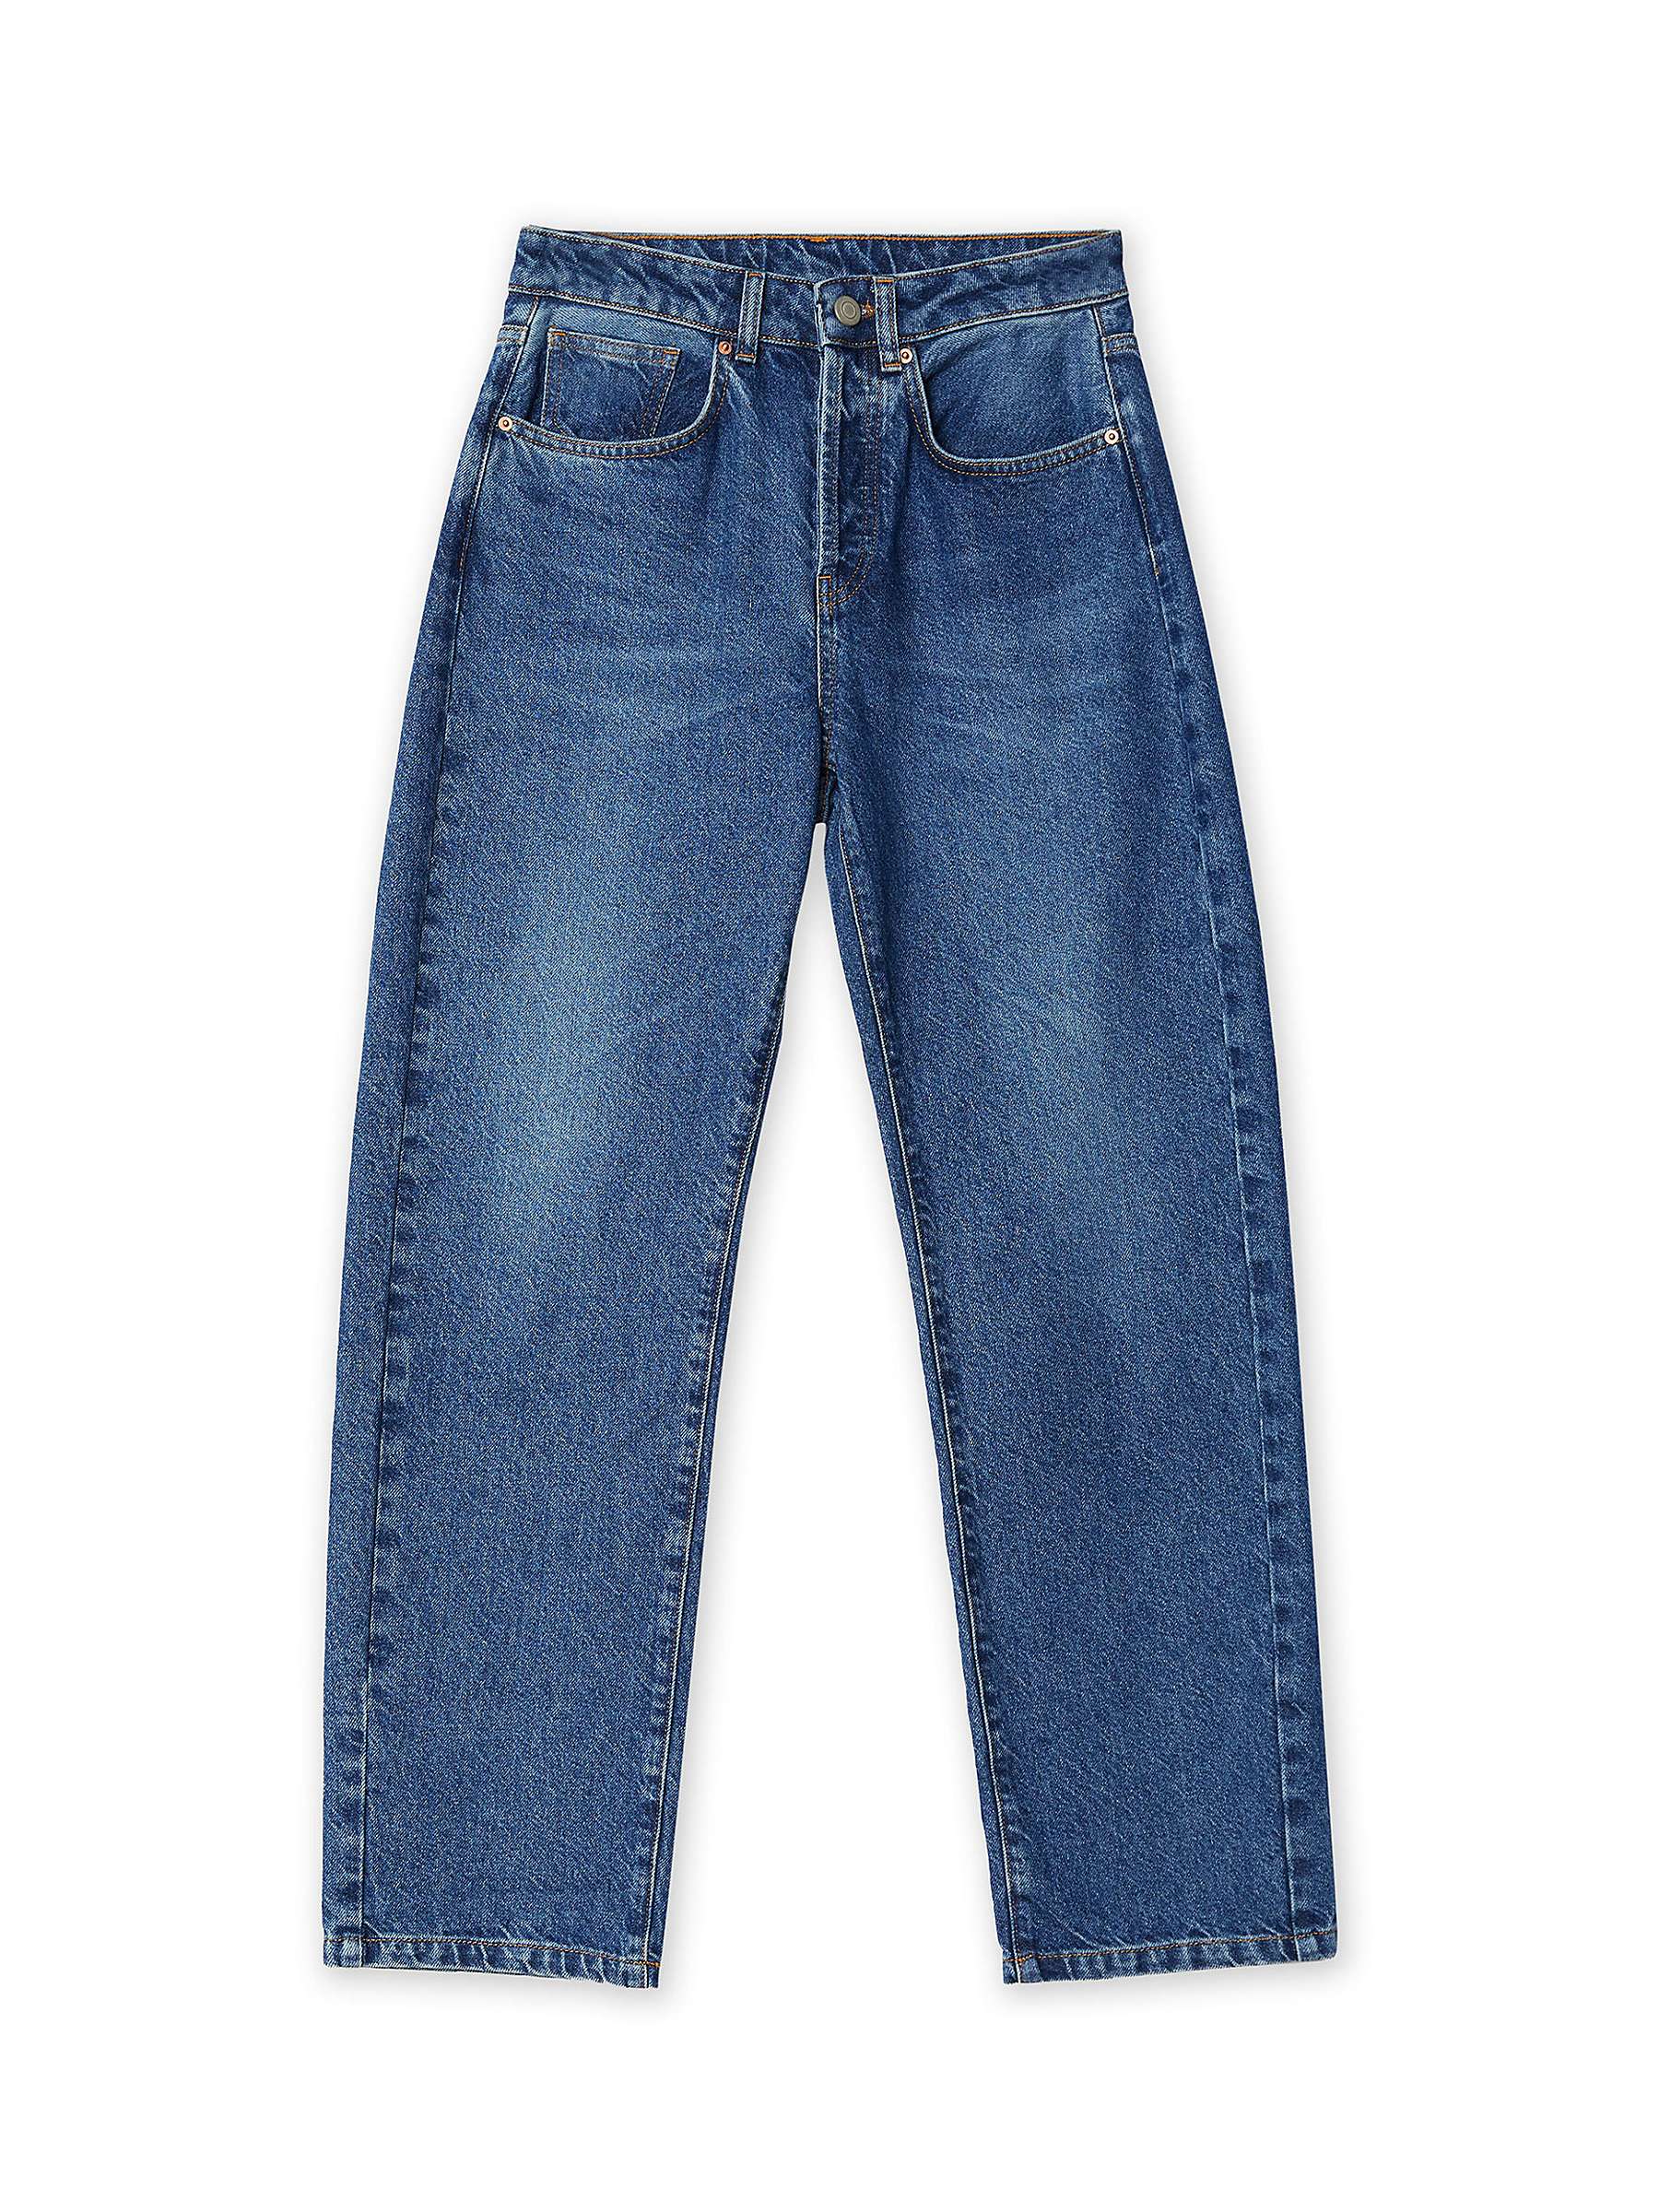 Buy Albaray Organic Cotton Boyfriend Jeans, Indigo Online at johnlewis.com